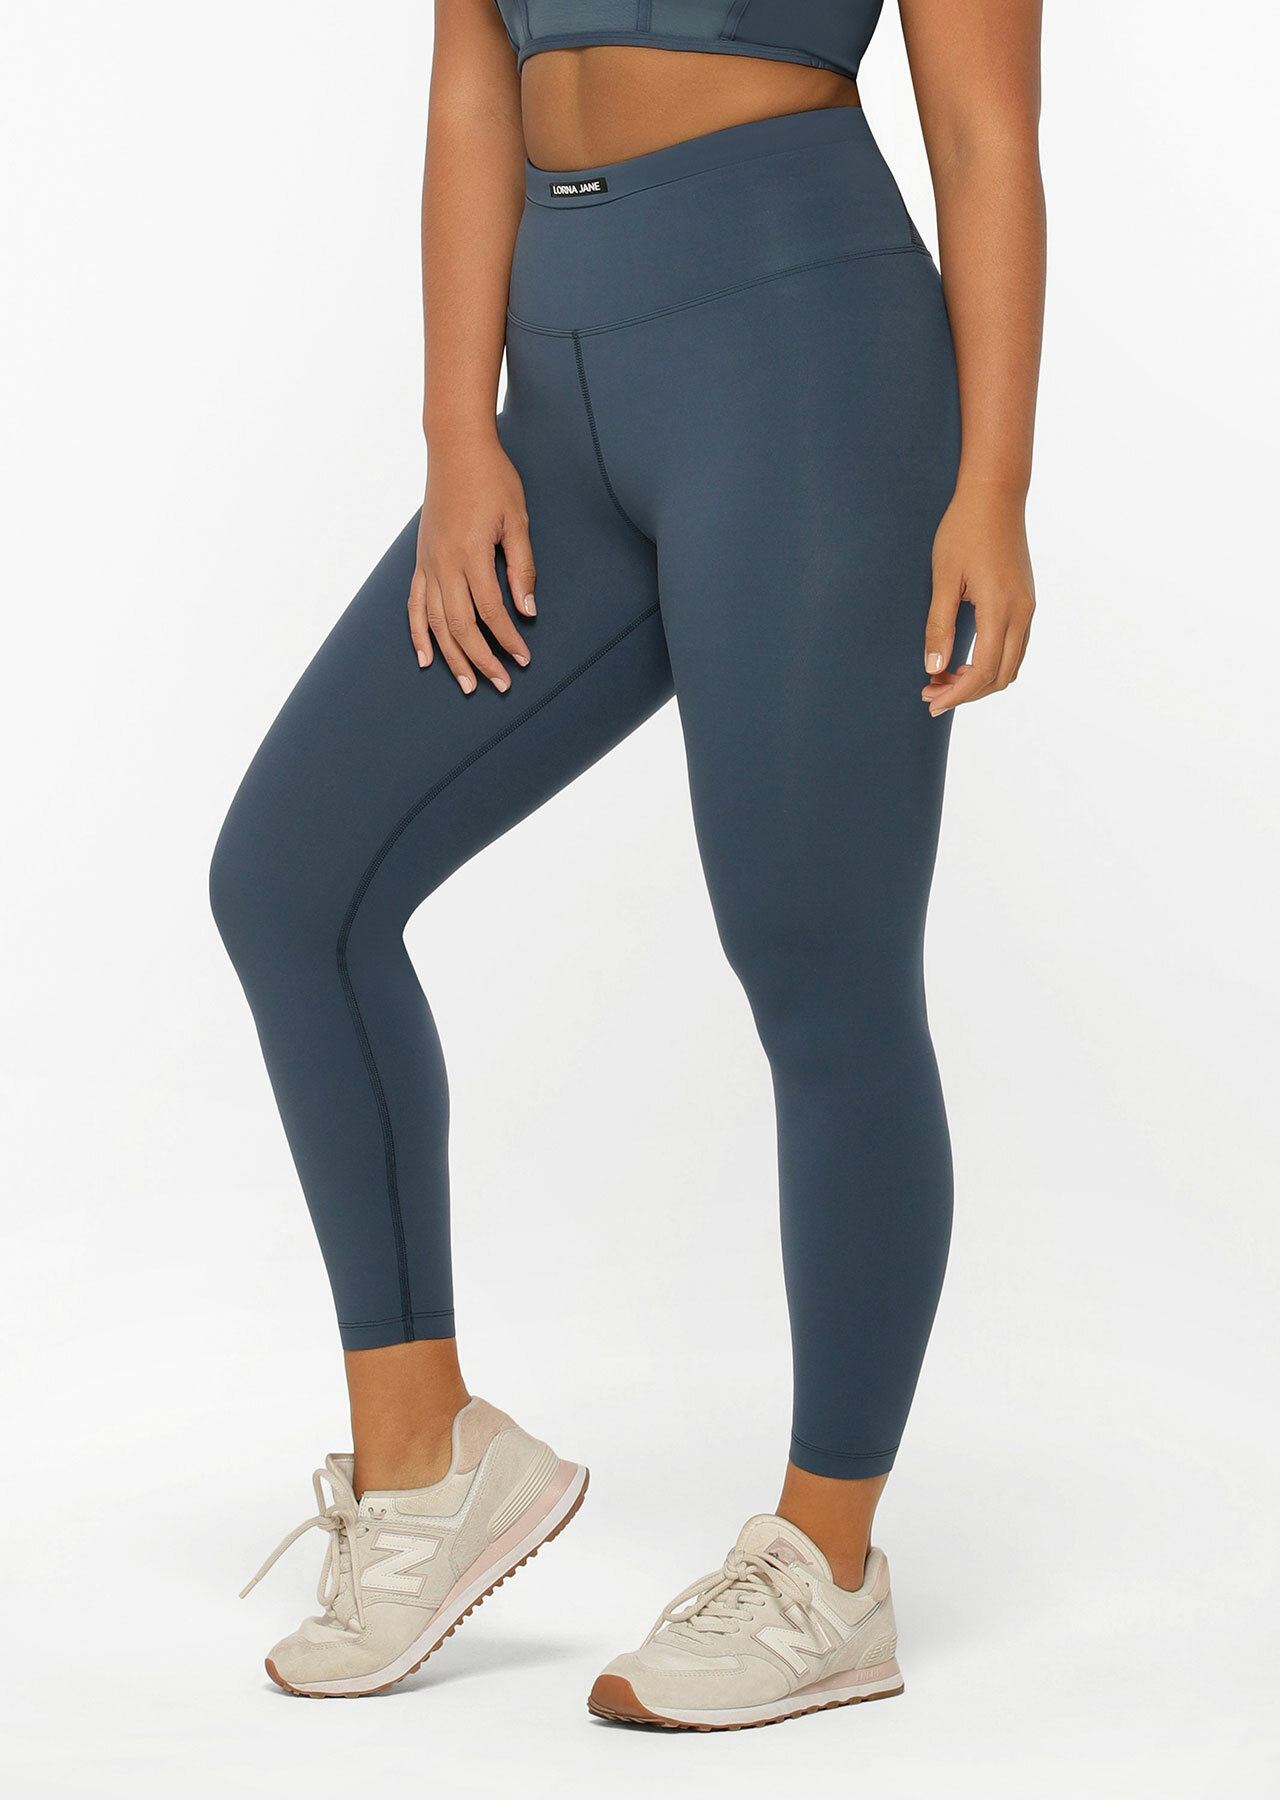 SweatyRocks Women's High Waist Yoga Pants Mesh Insert Workout Leggings  Stretchy Tights Black L at  Women's Clothing store